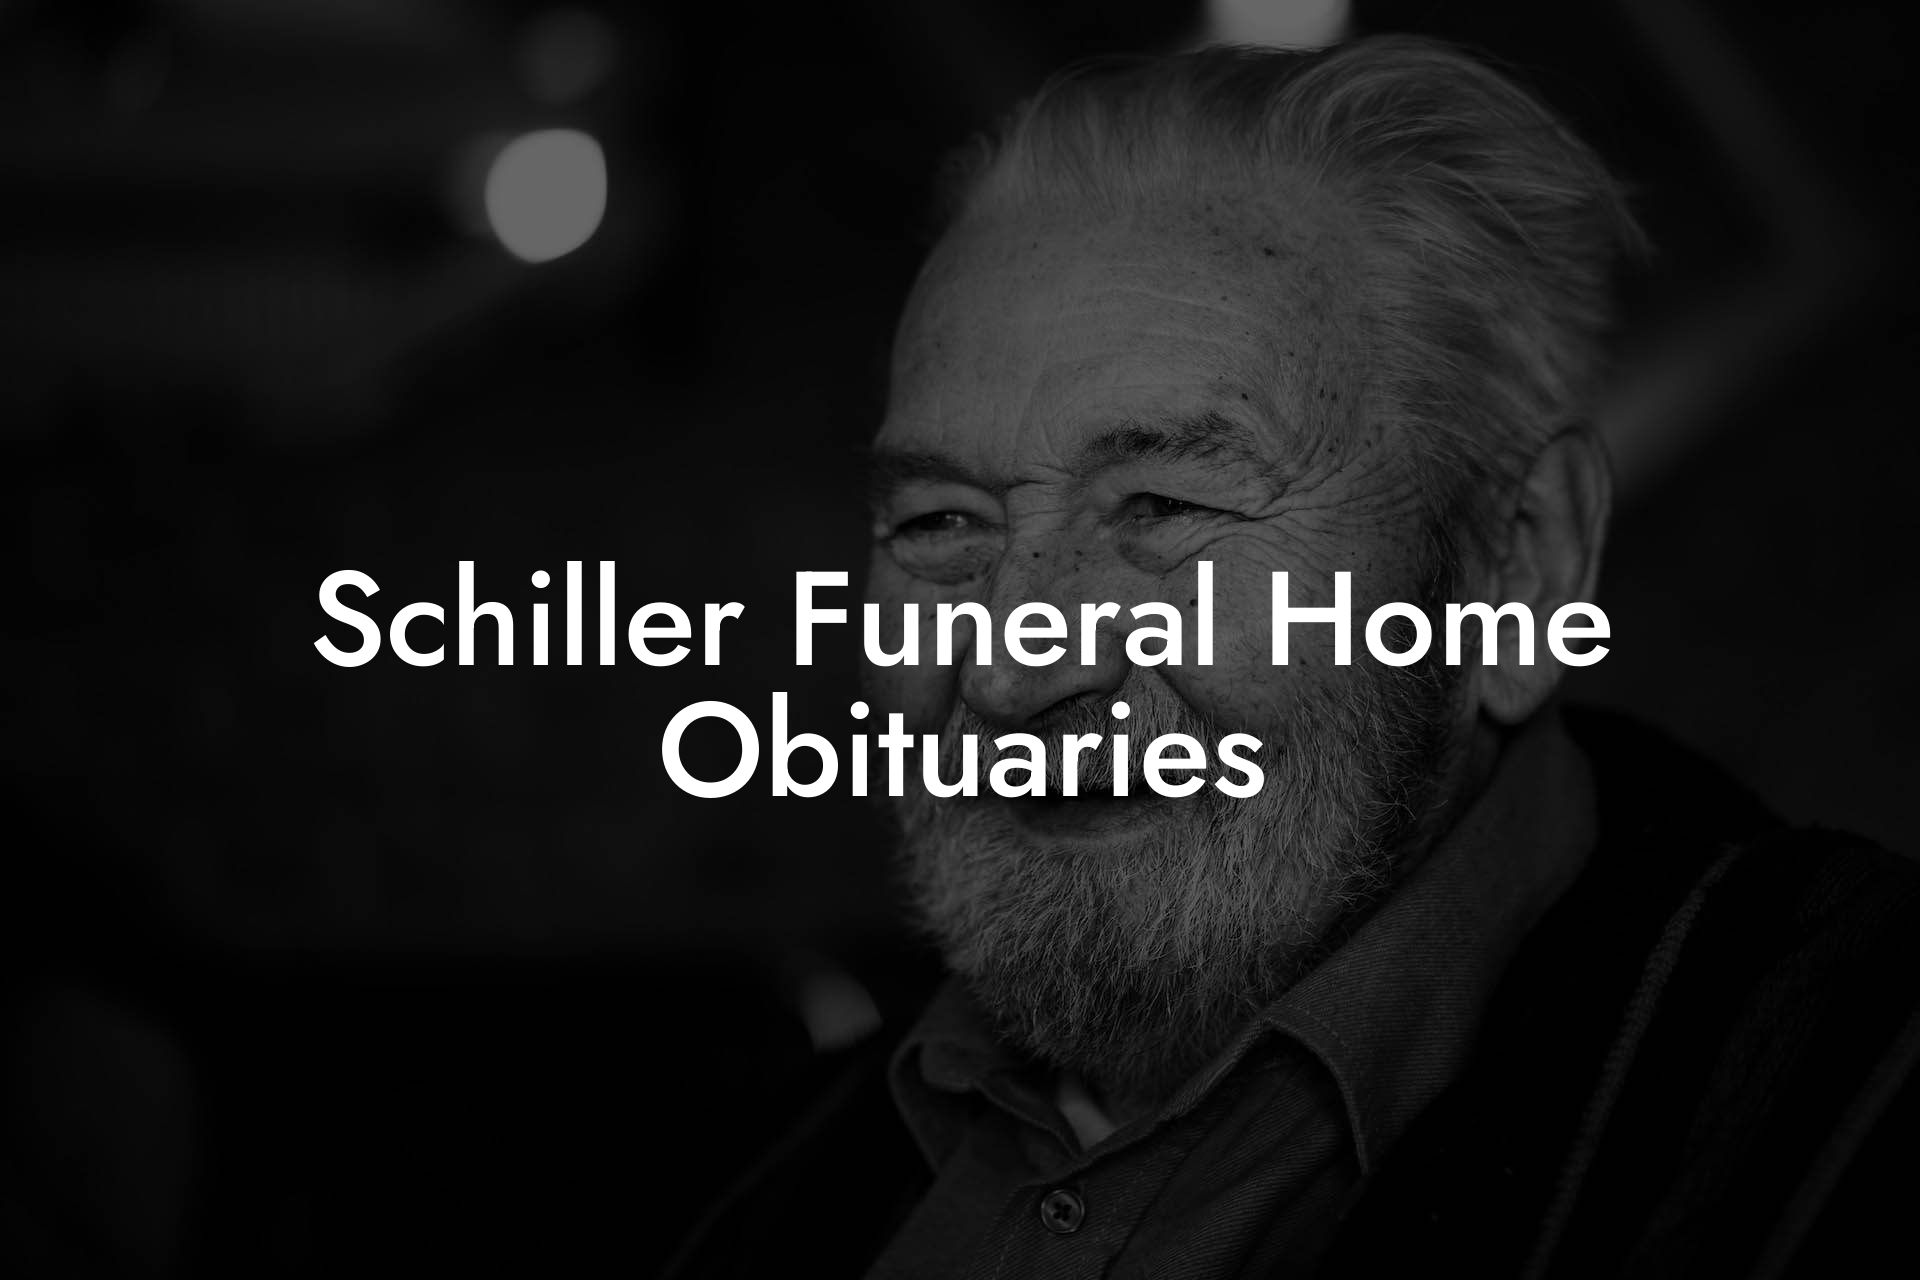 Schiller Funeral Home Obituaries